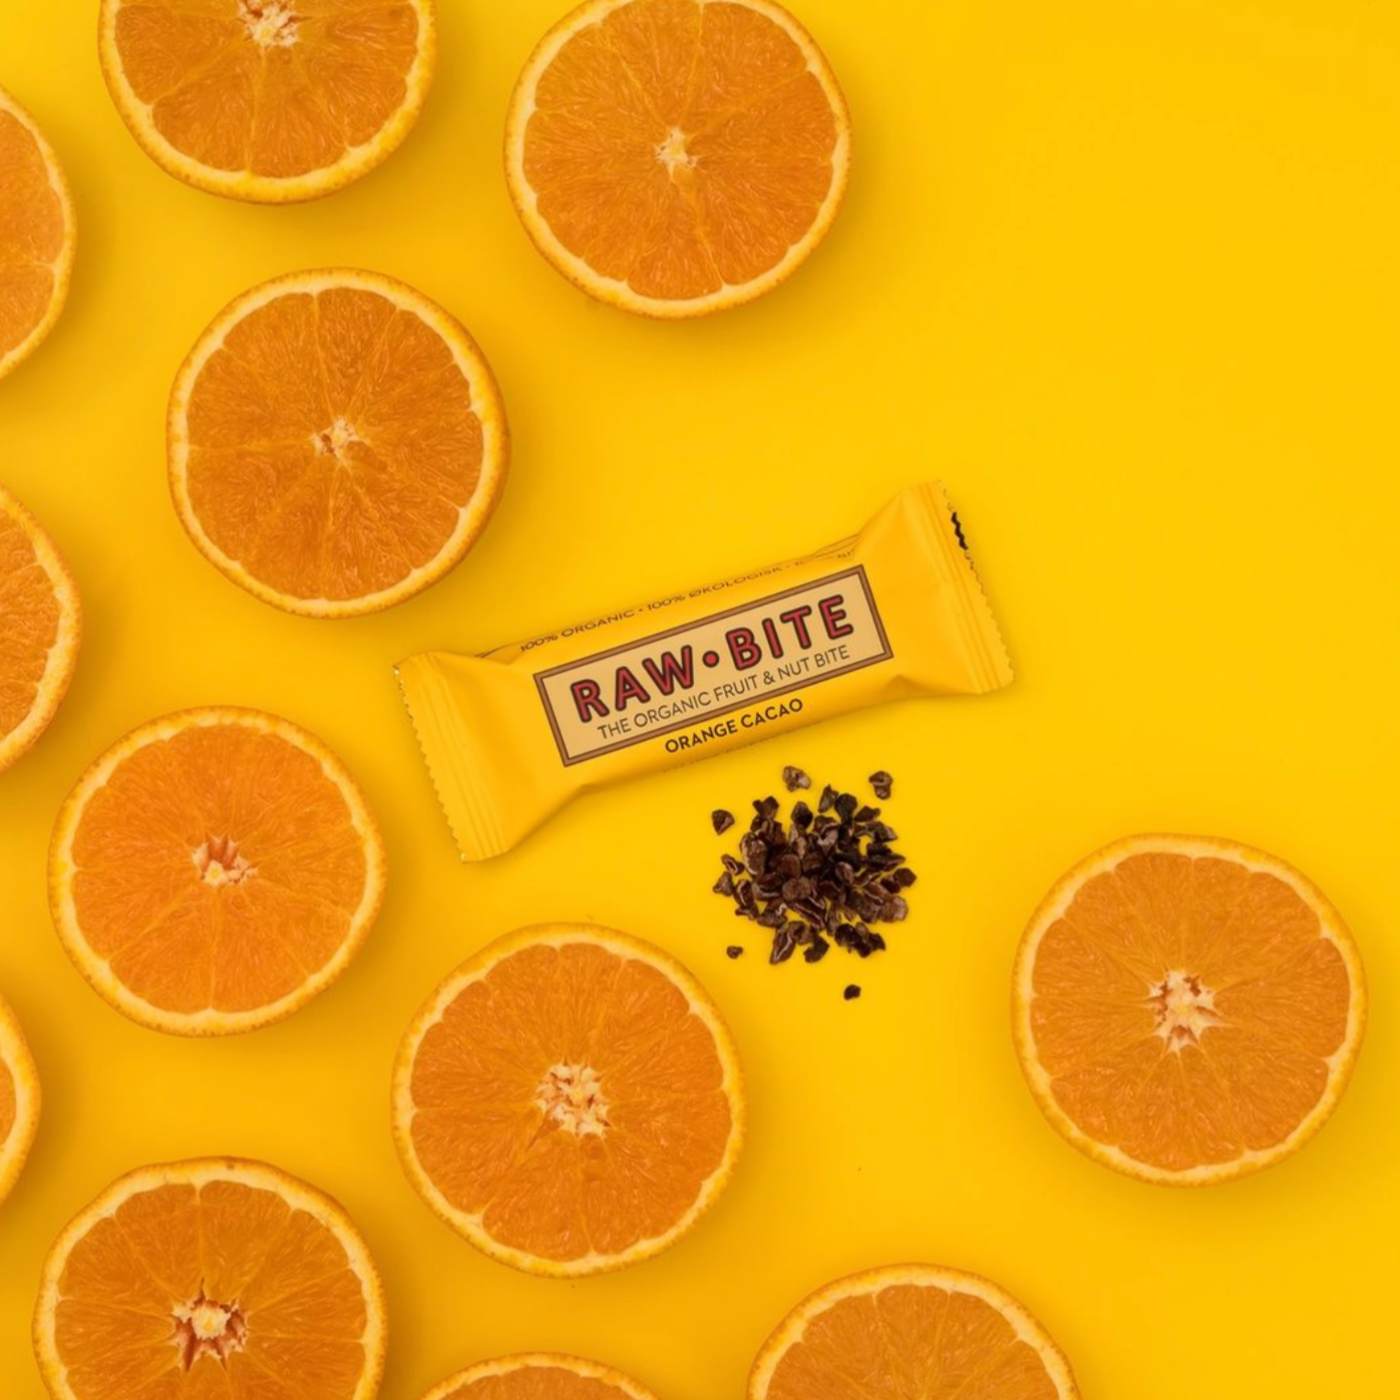 RAWBITE Orange